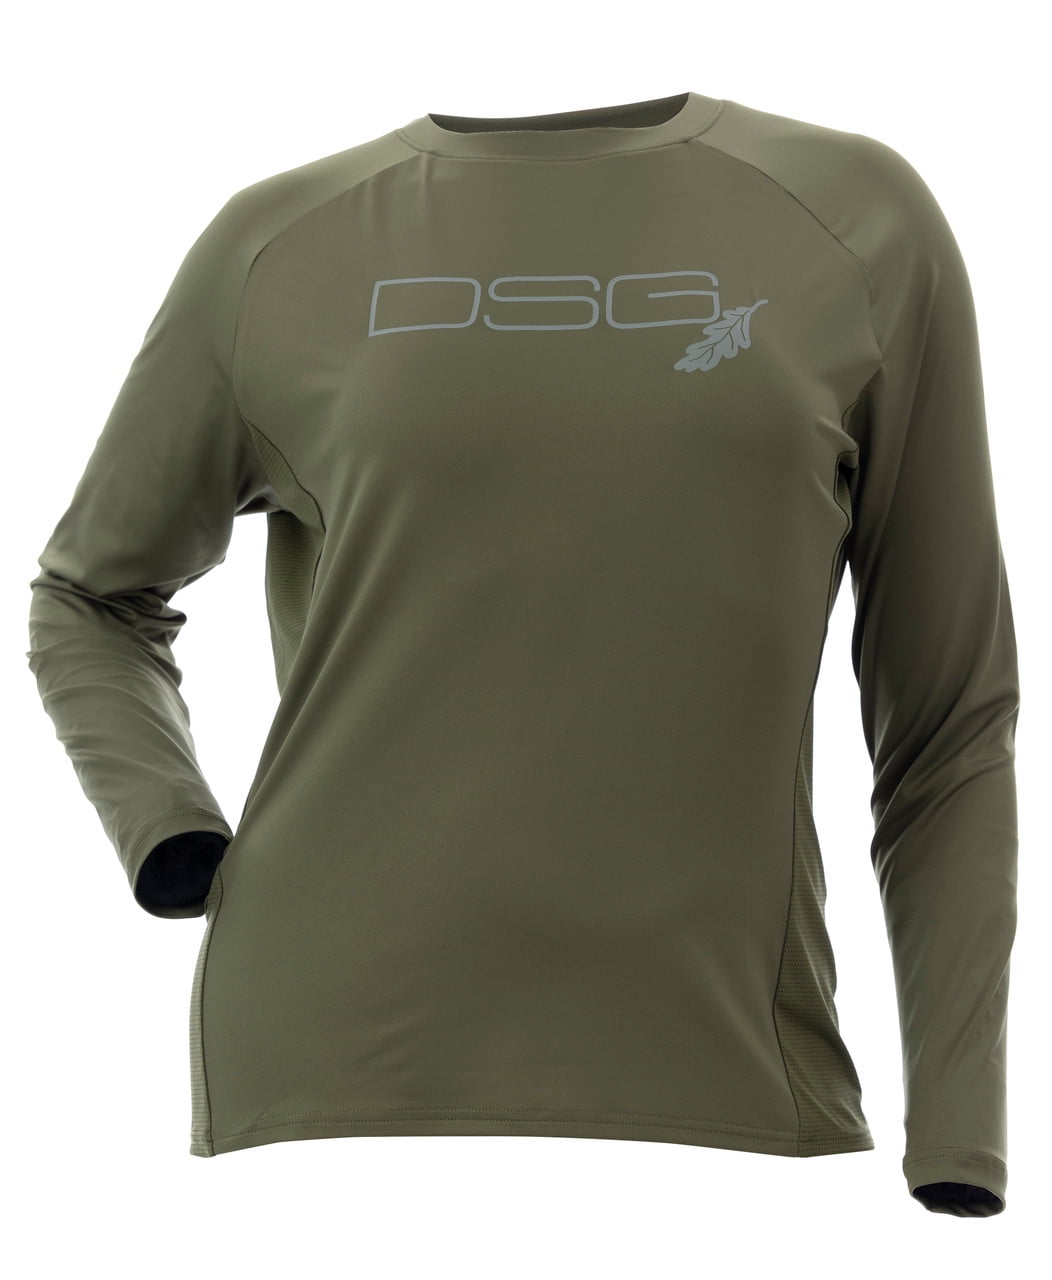 DSG Outerwear Ultra Lightweight Hunting Shirt - UPF 50+, Charcoal, XS 